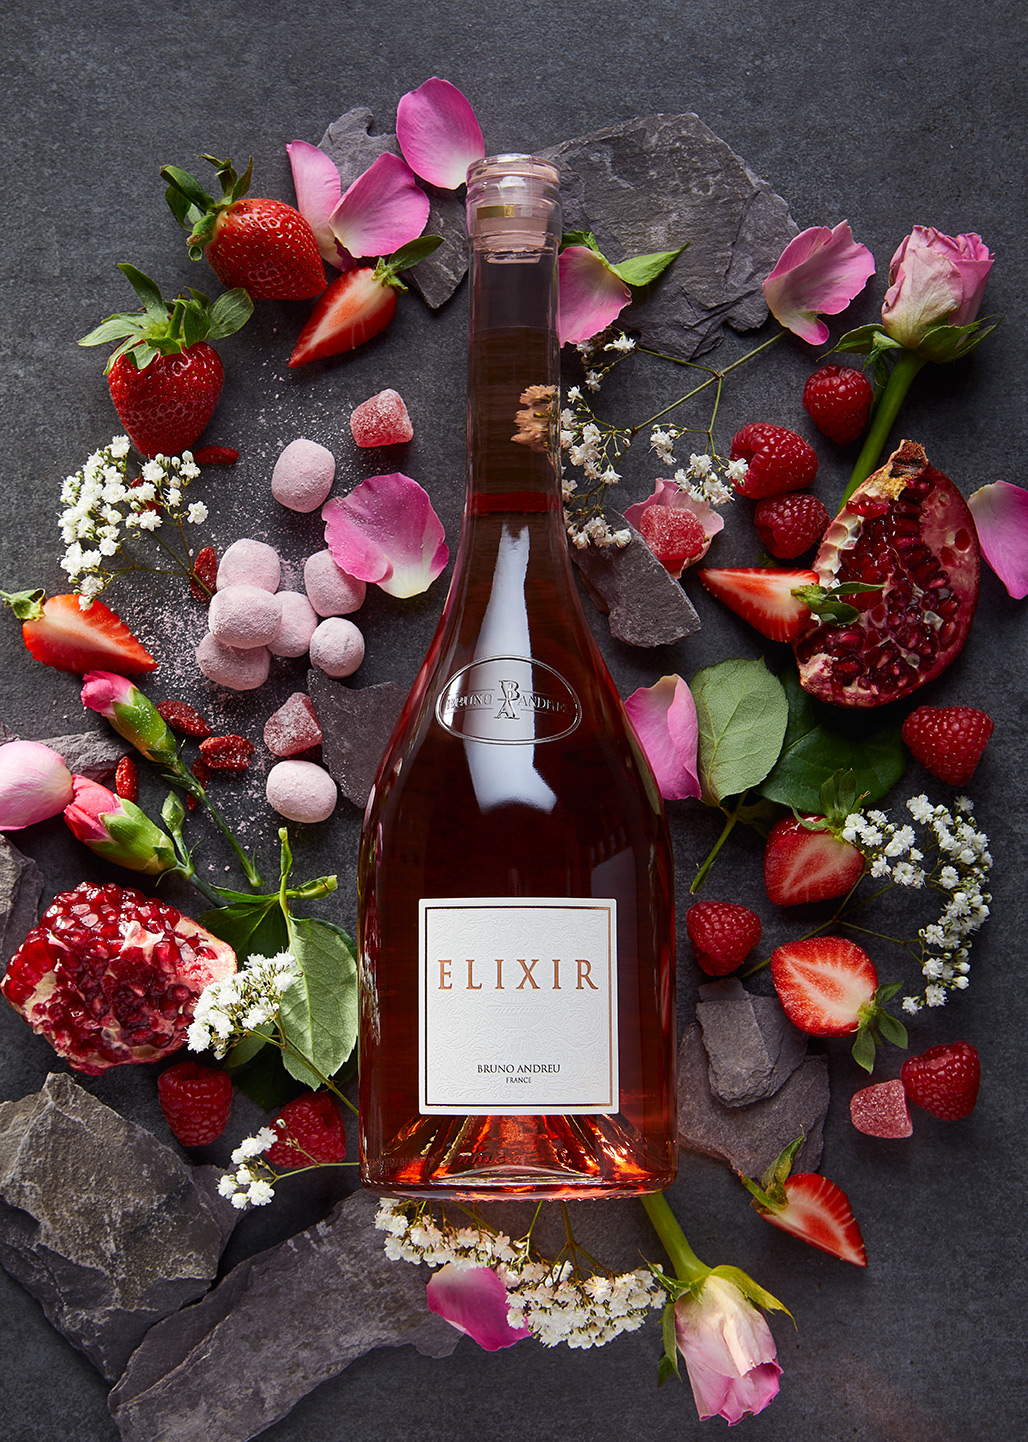 Bruno Andreu Elixir Rose Wine, Alastair Ferrier food & drink photographer Scotland